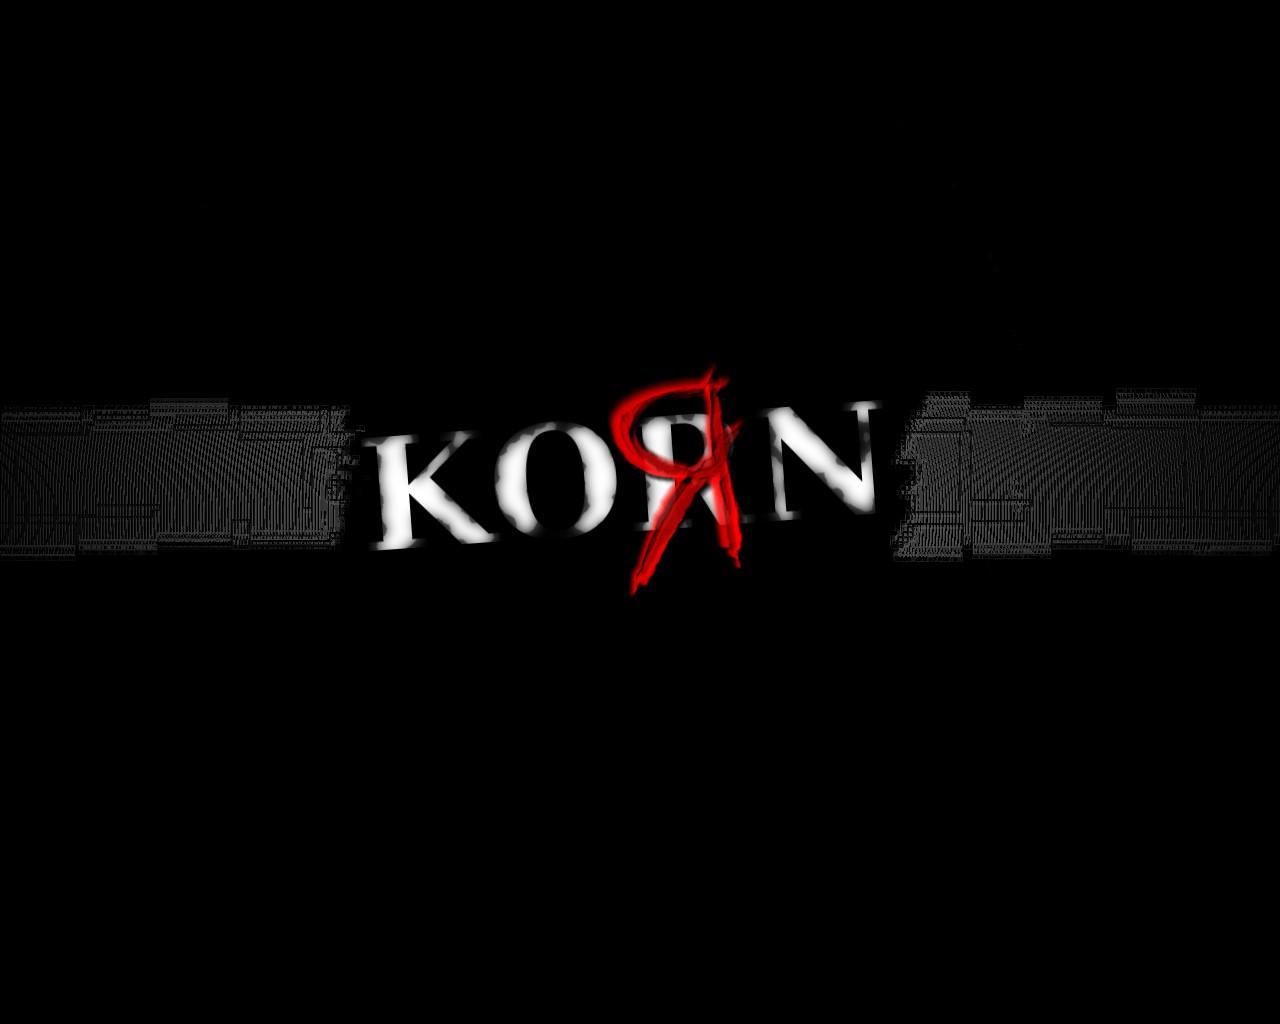 korn logo wallpaper #9